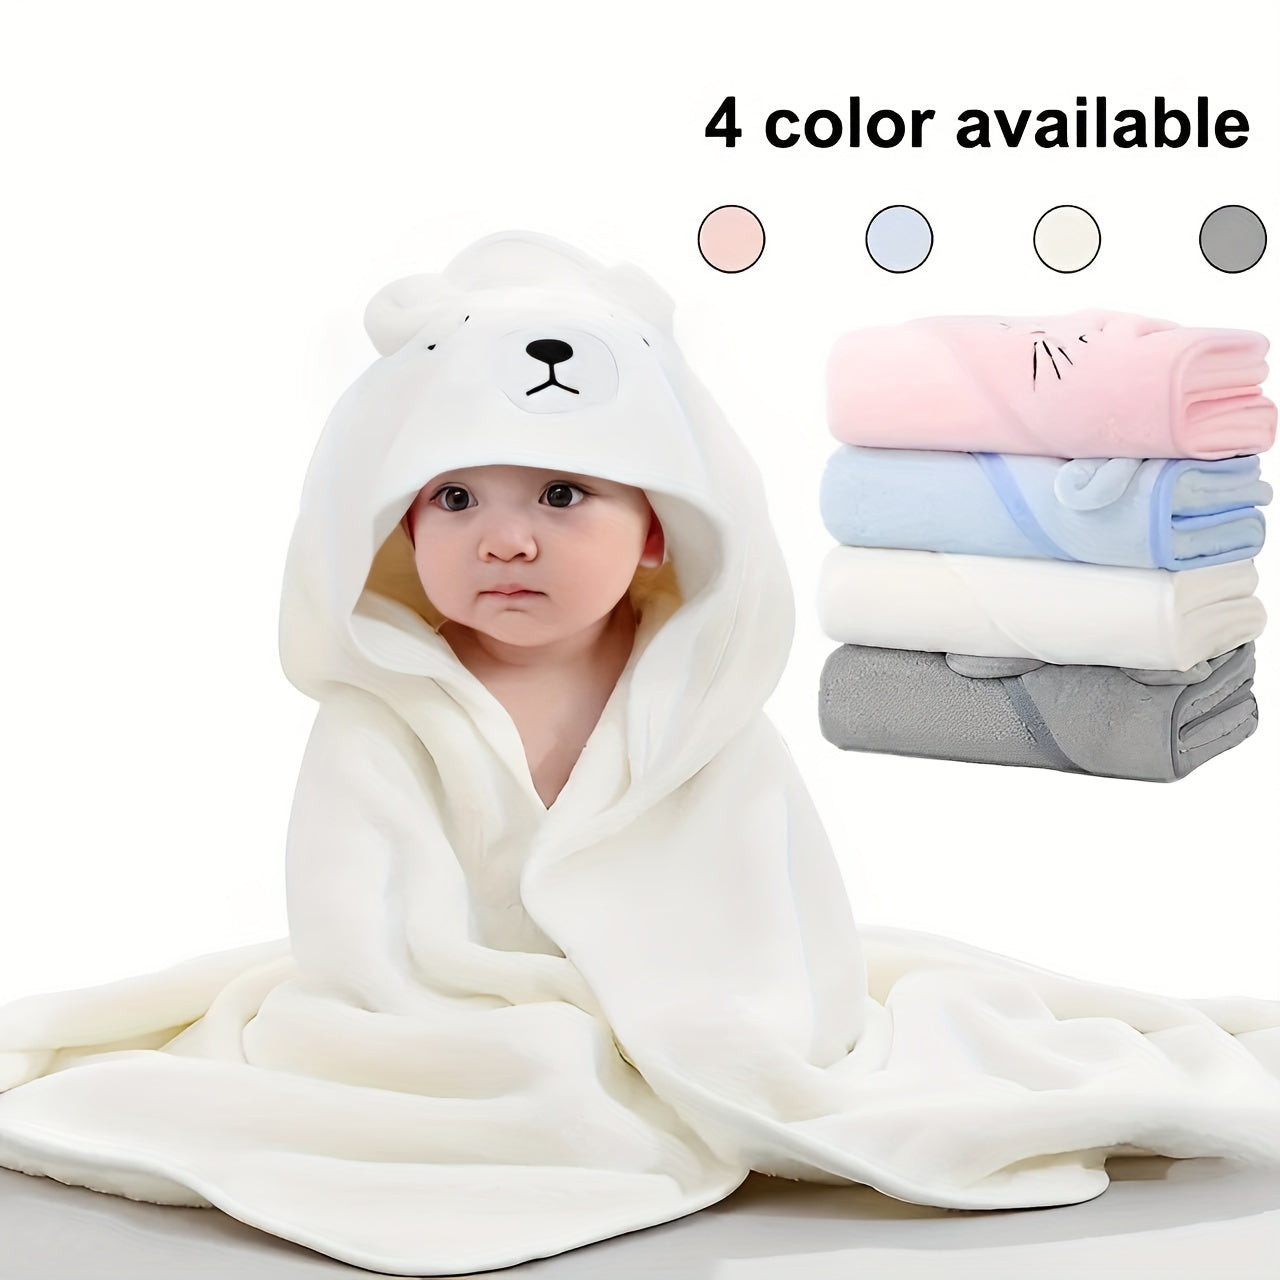 1pc Soft & Skin-Friendly Children's Cartoon Bath Towel & Blanket - Multifunctional & Absorbent!